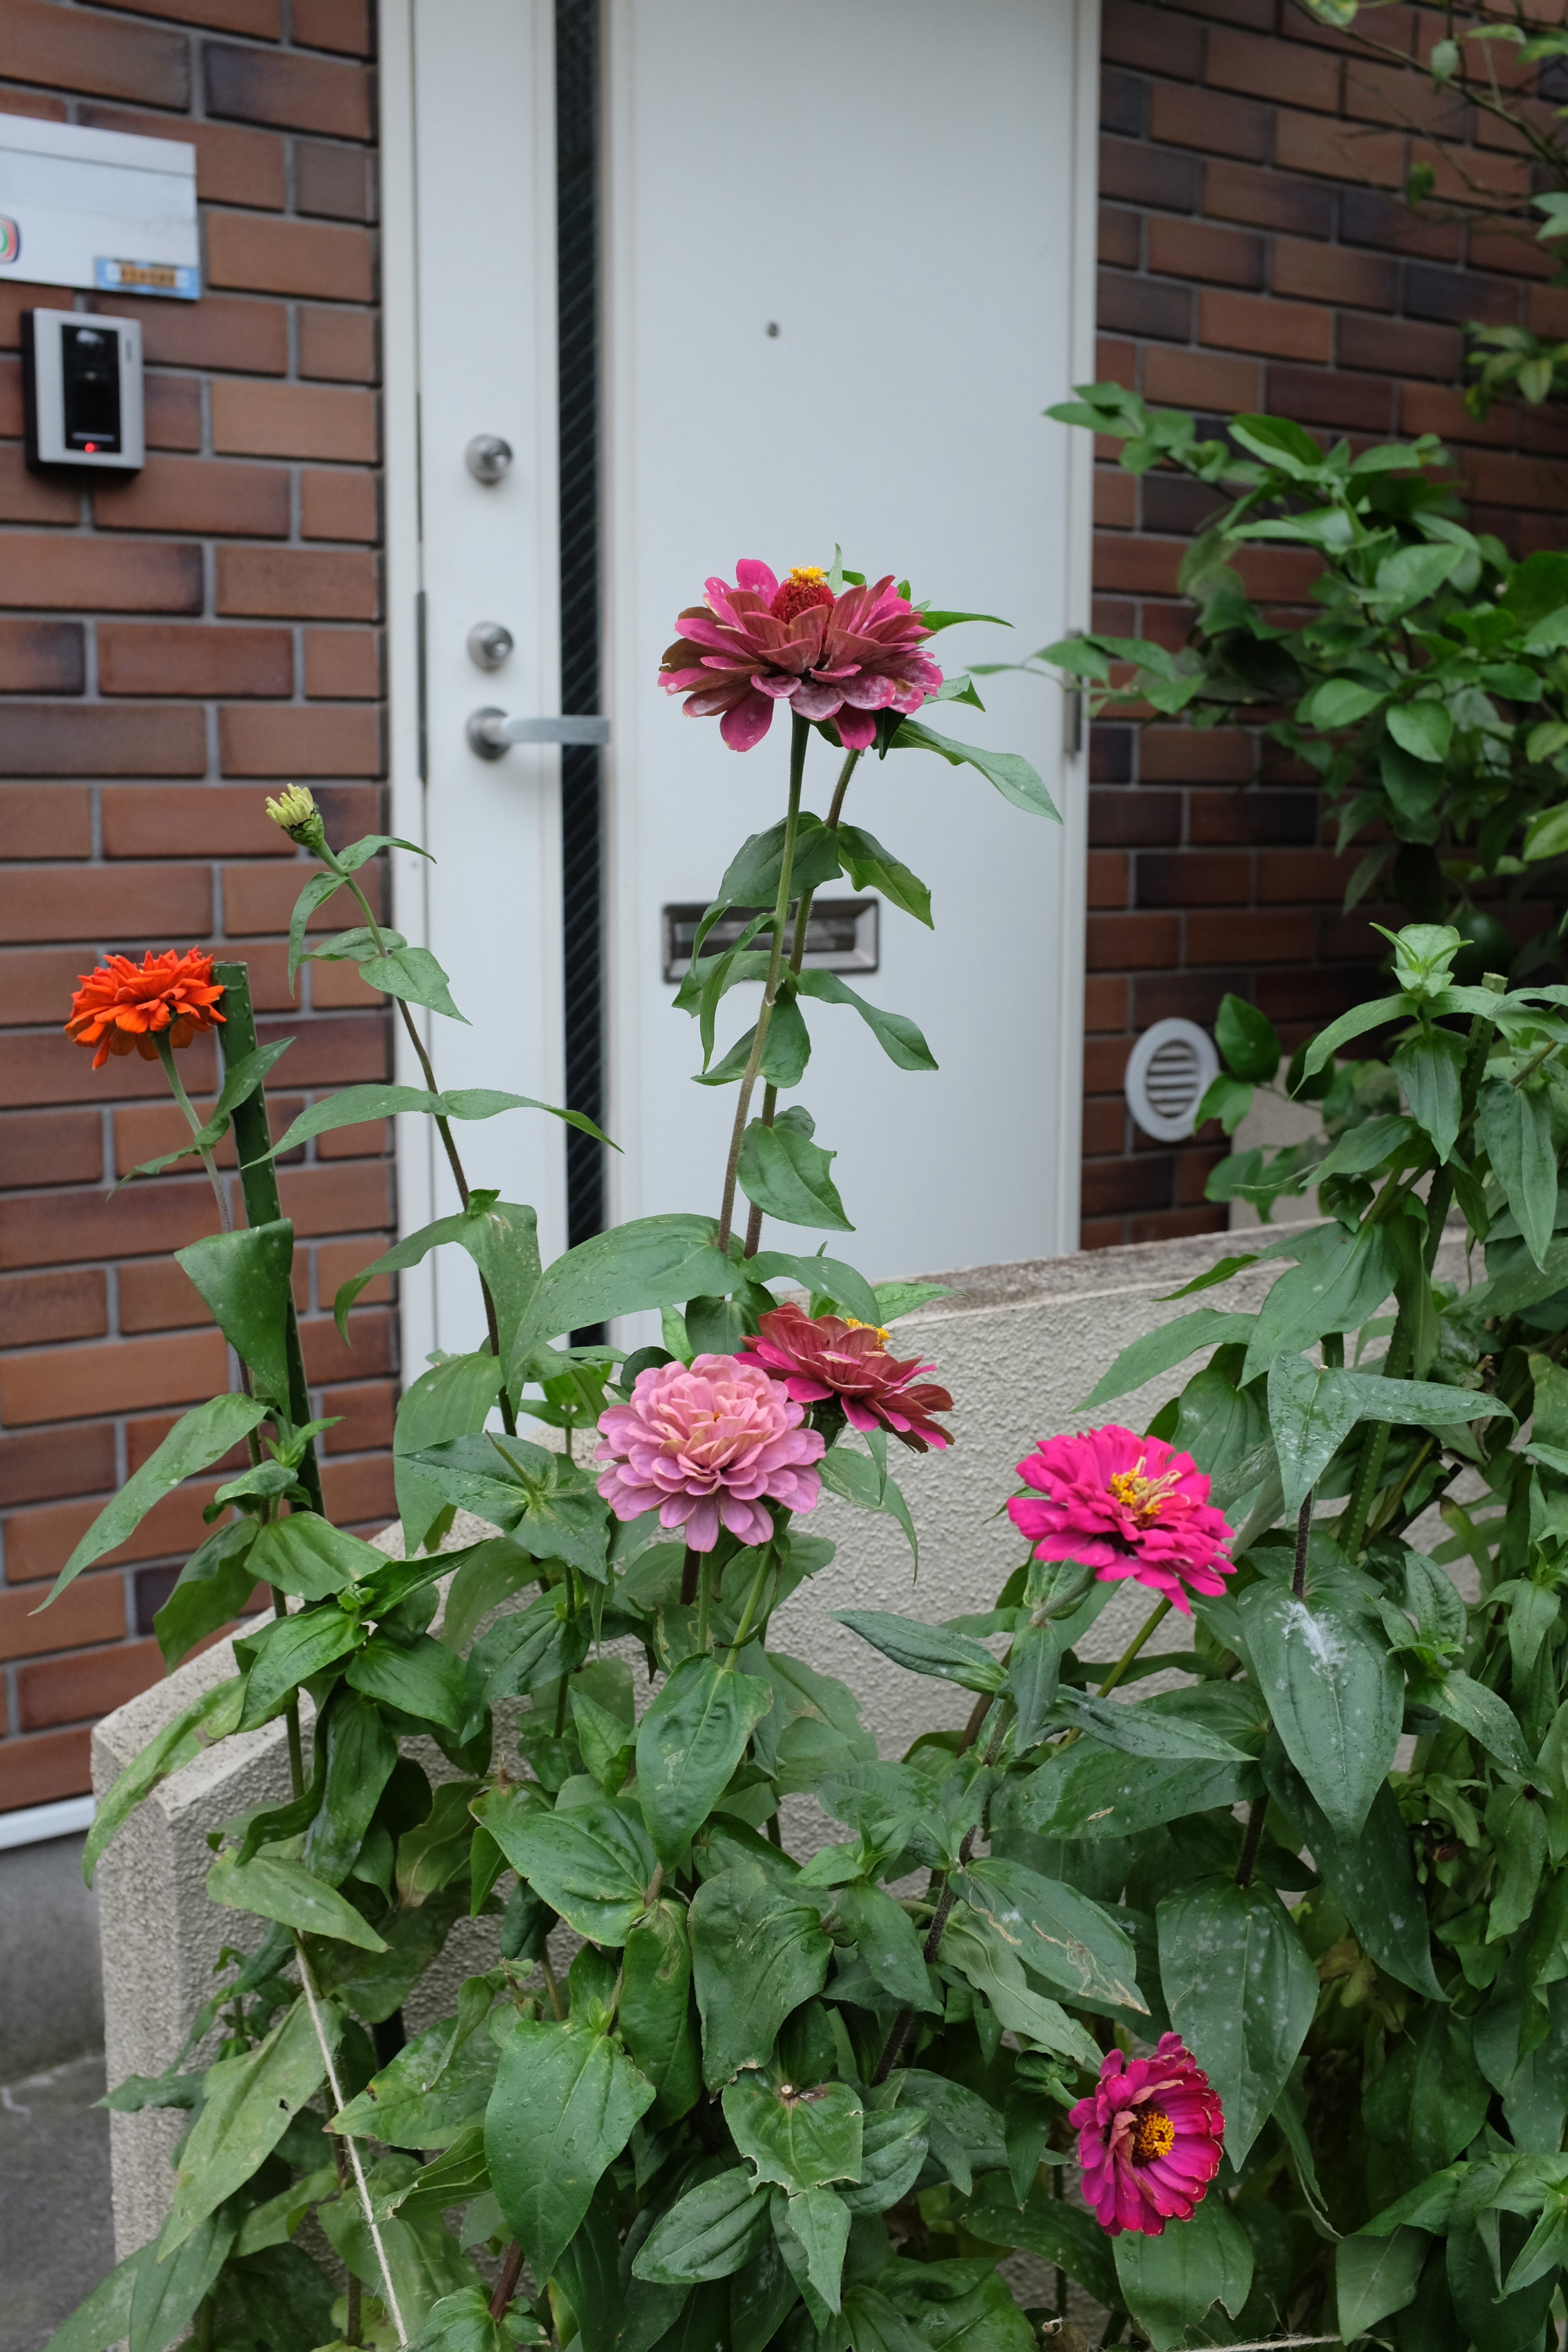 Flowers on the doorstep